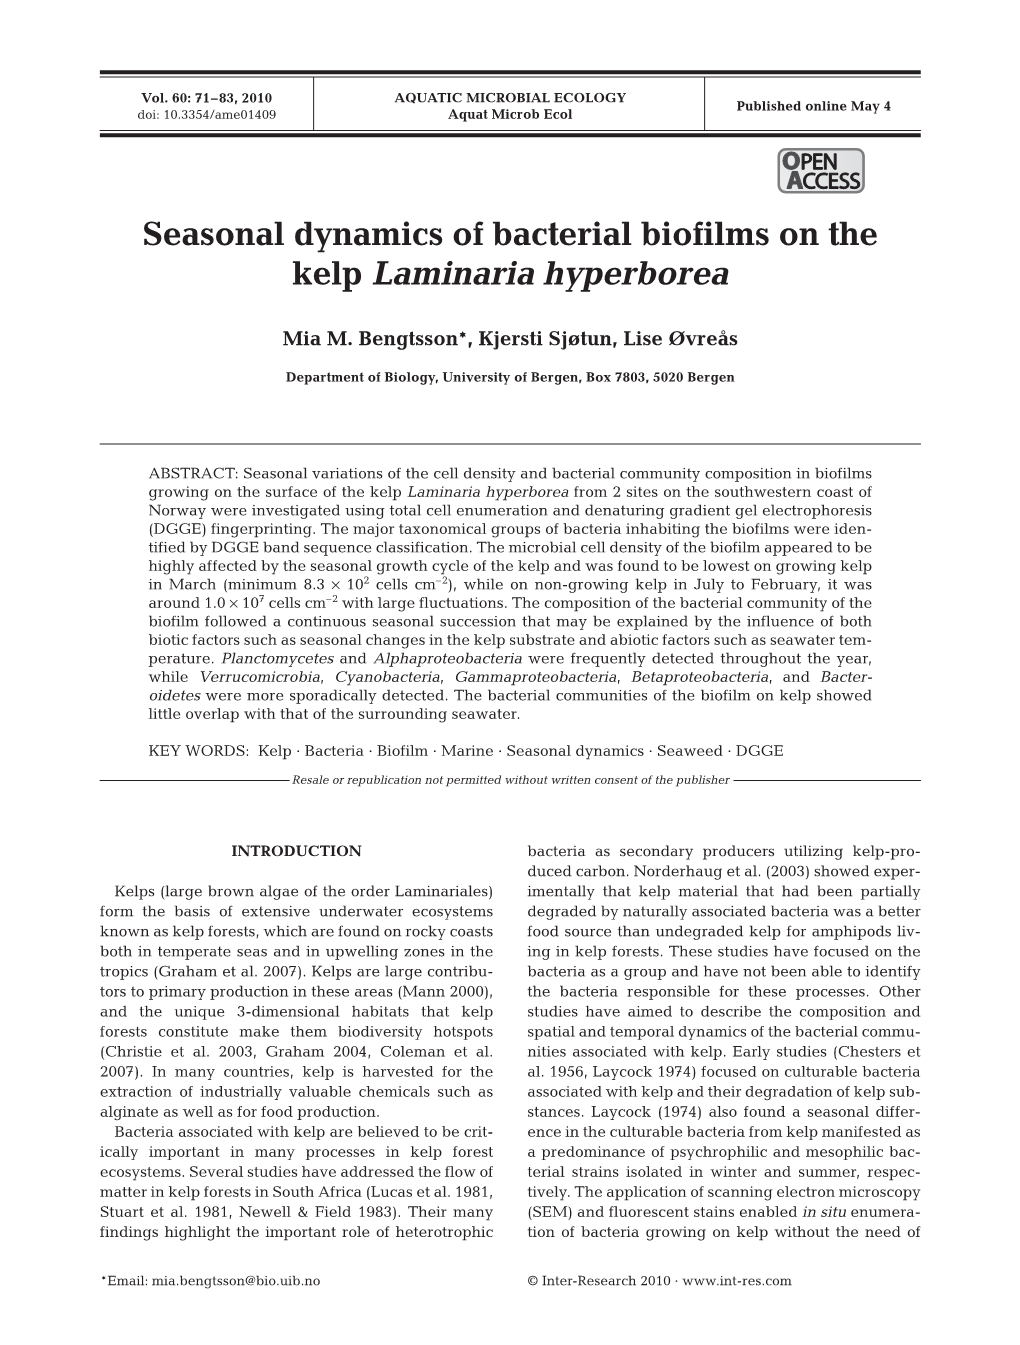 Seasonal Dynamics of Bacterial Biofilms on the Kelp Laminaria Hyperborea